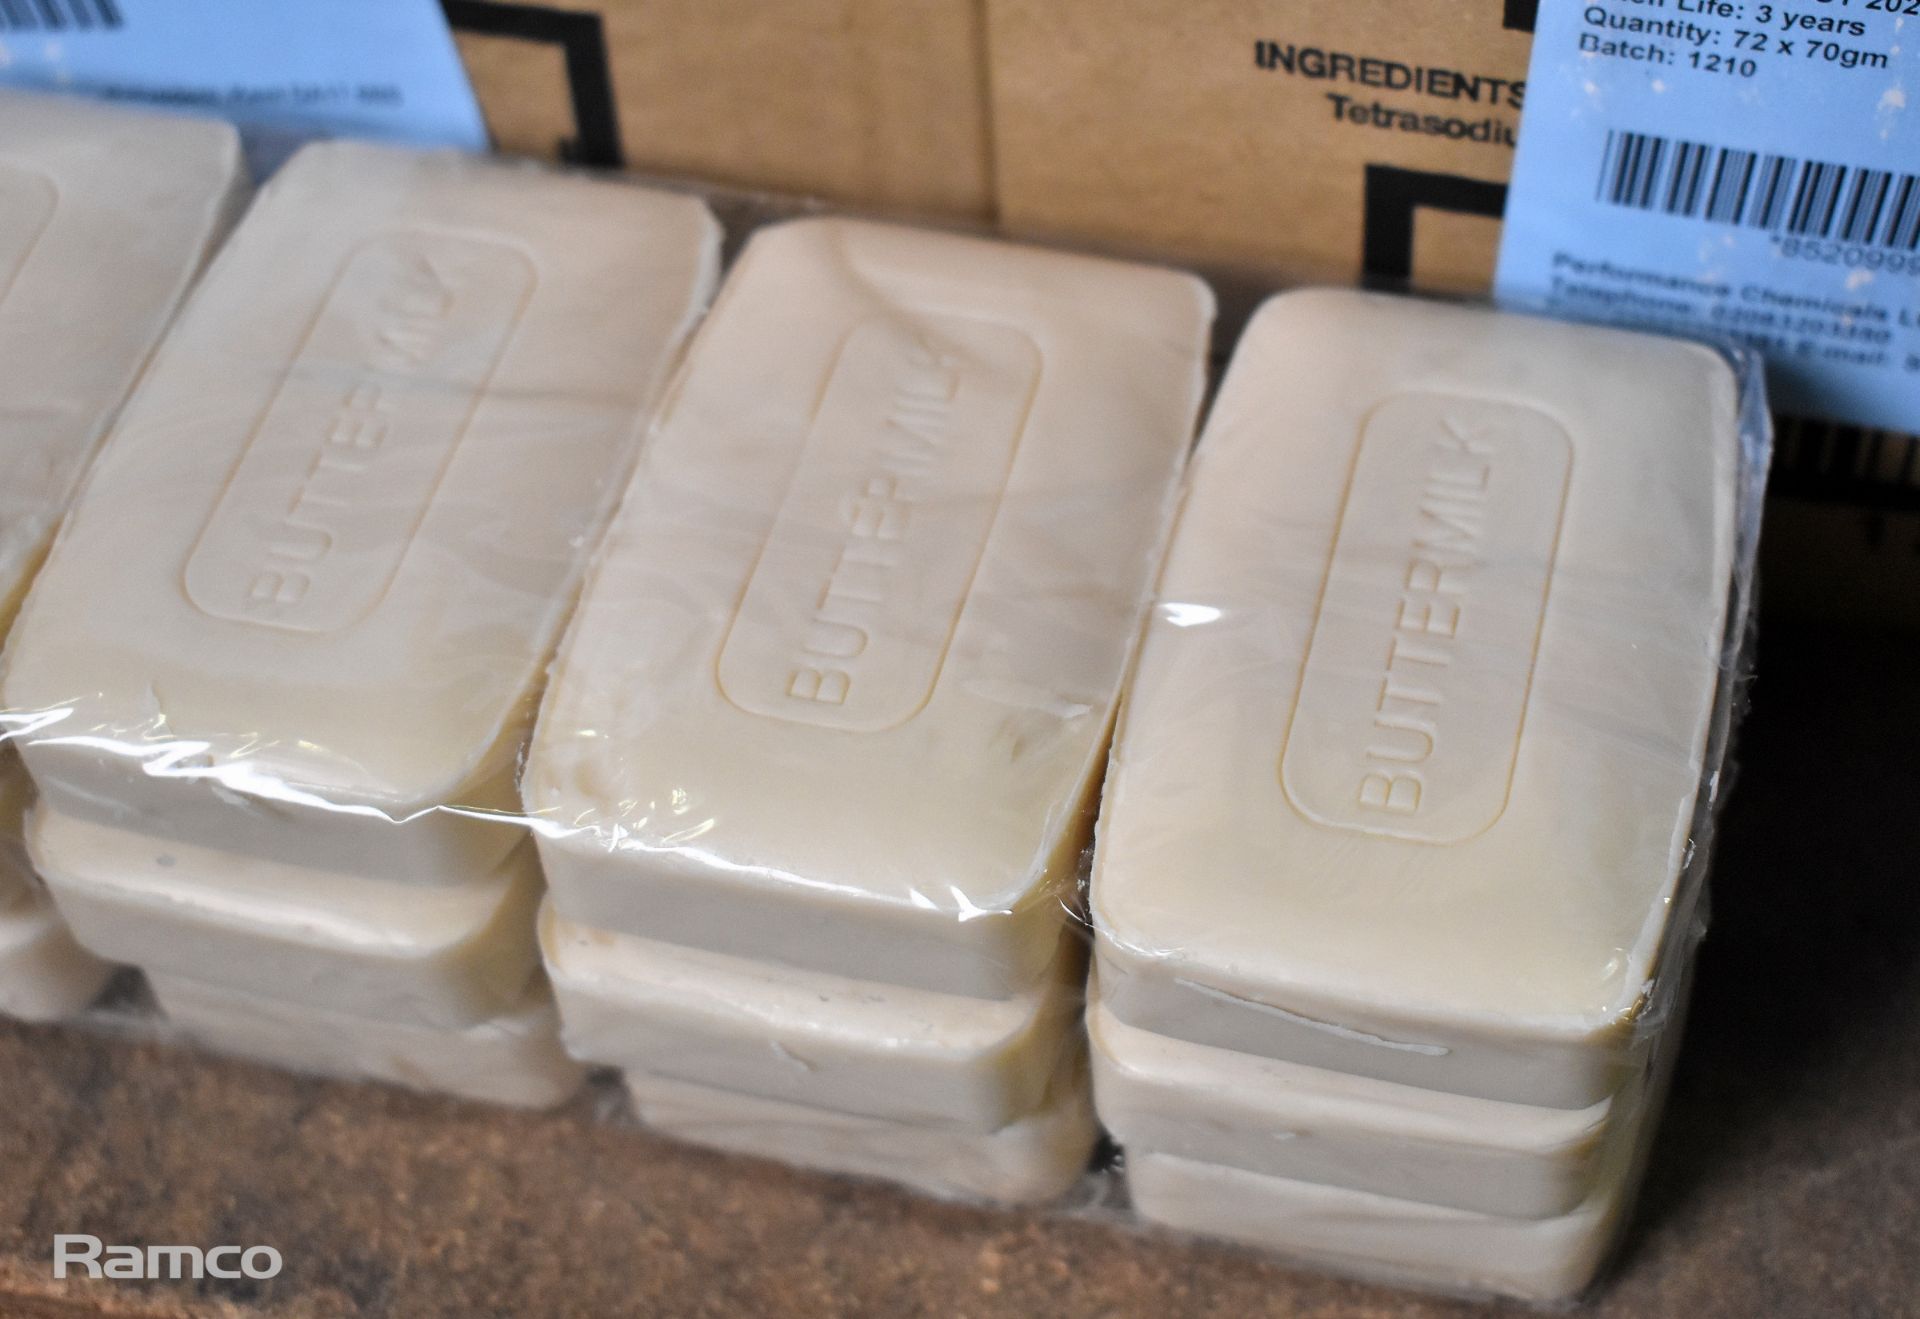 8x boxes of Buttermilk soap bar 70g - 72 units per box - Image 2 of 3